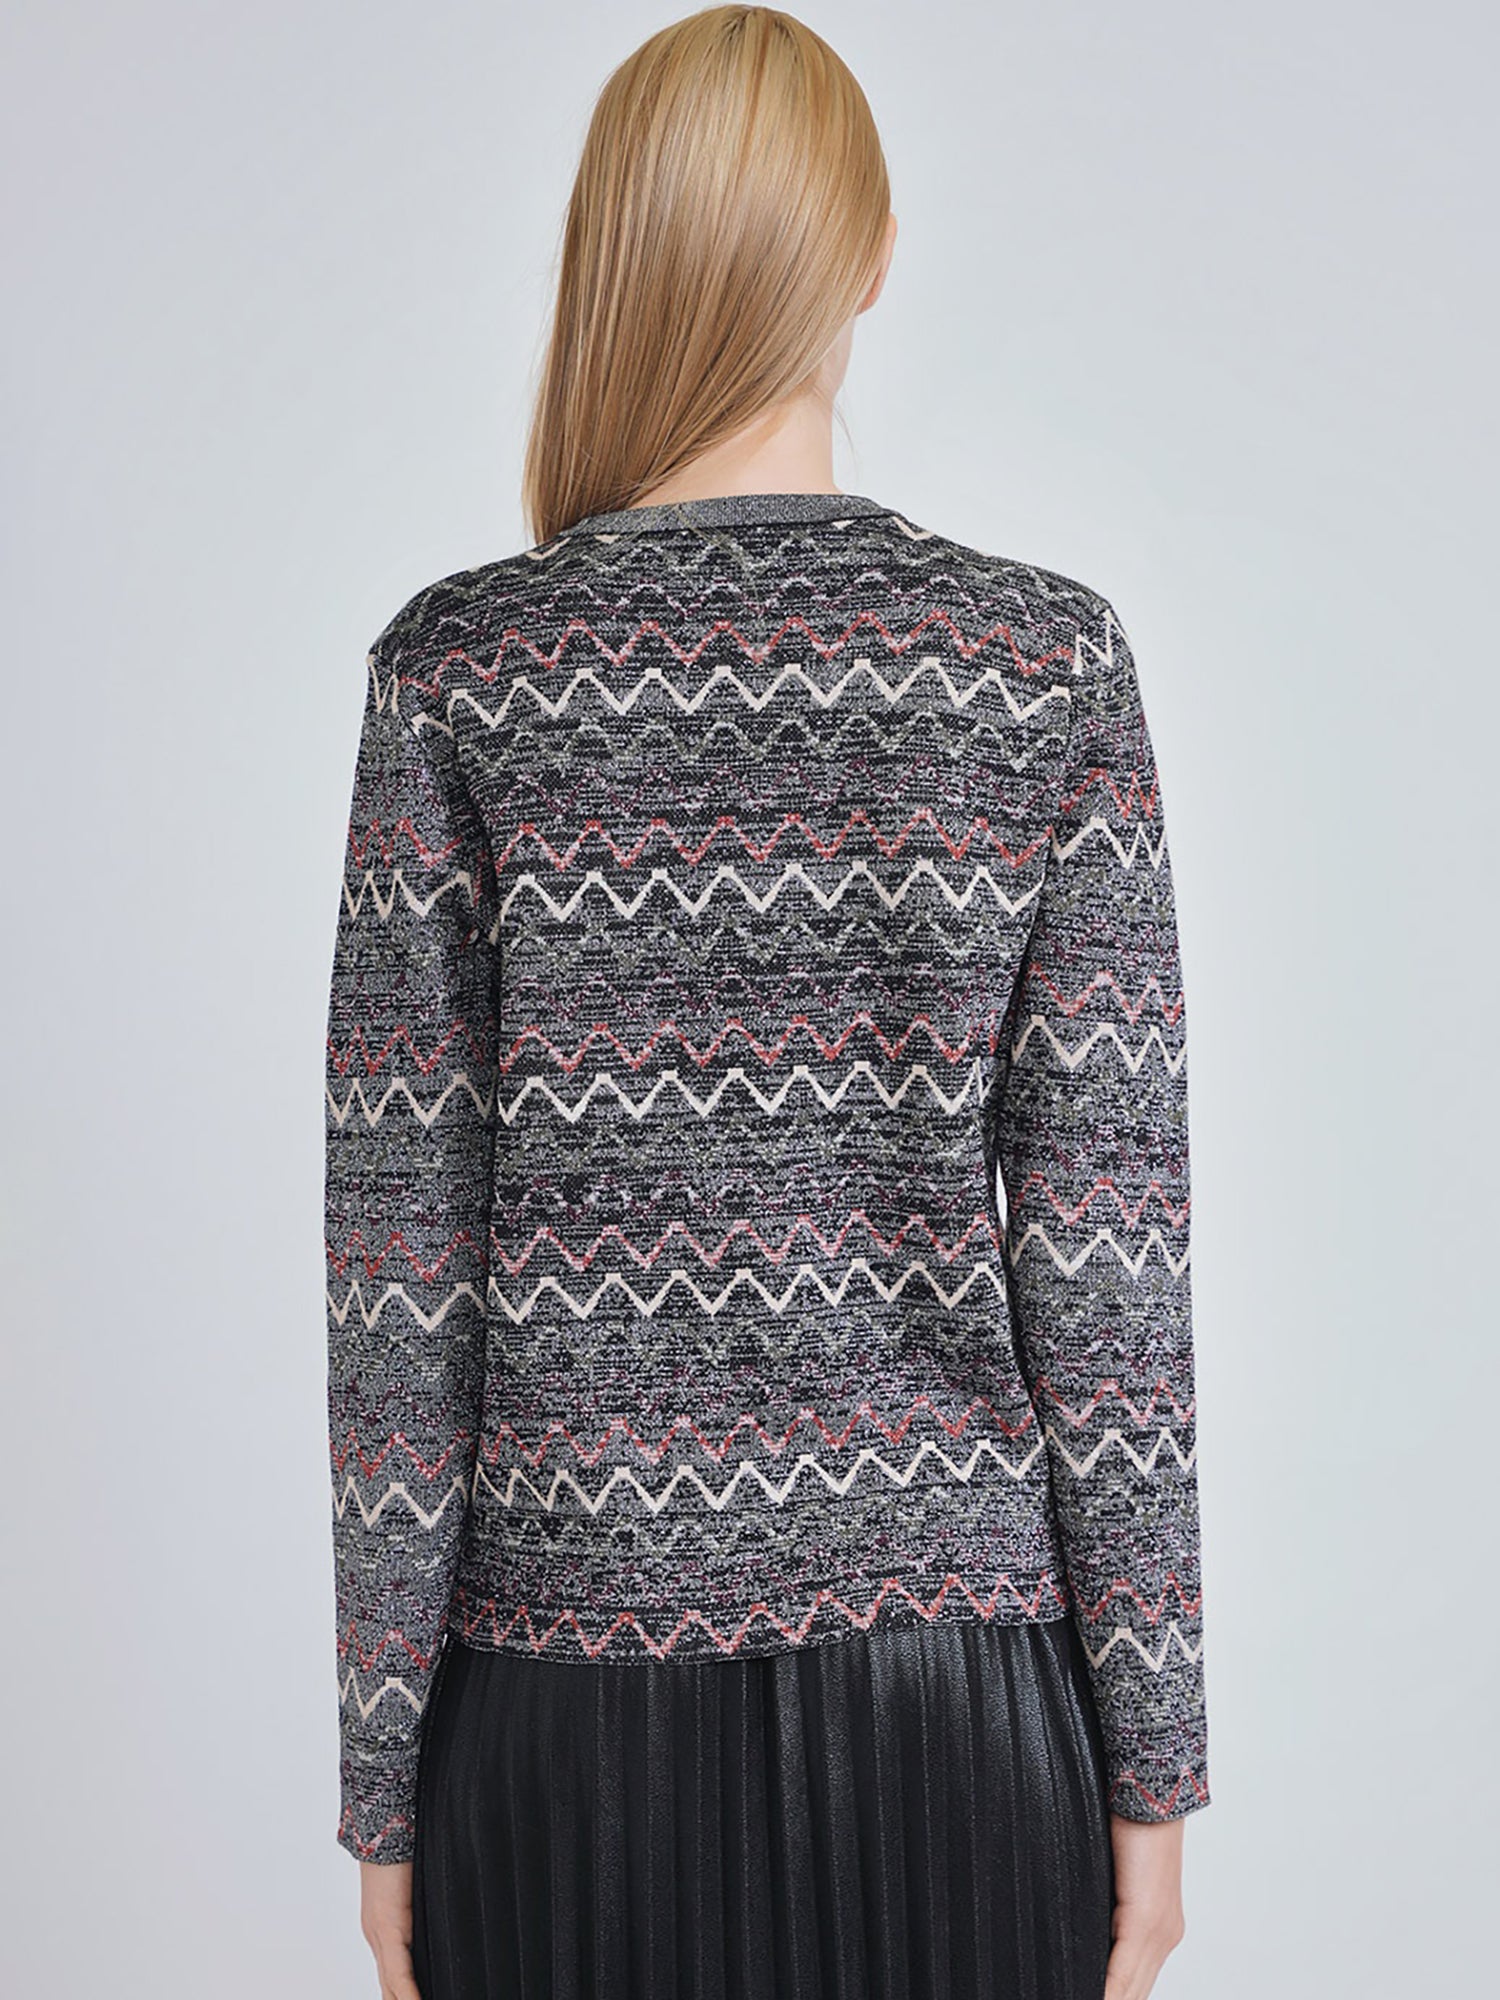 Yal Missoni Zigzag Metallic Sweater - Sweater